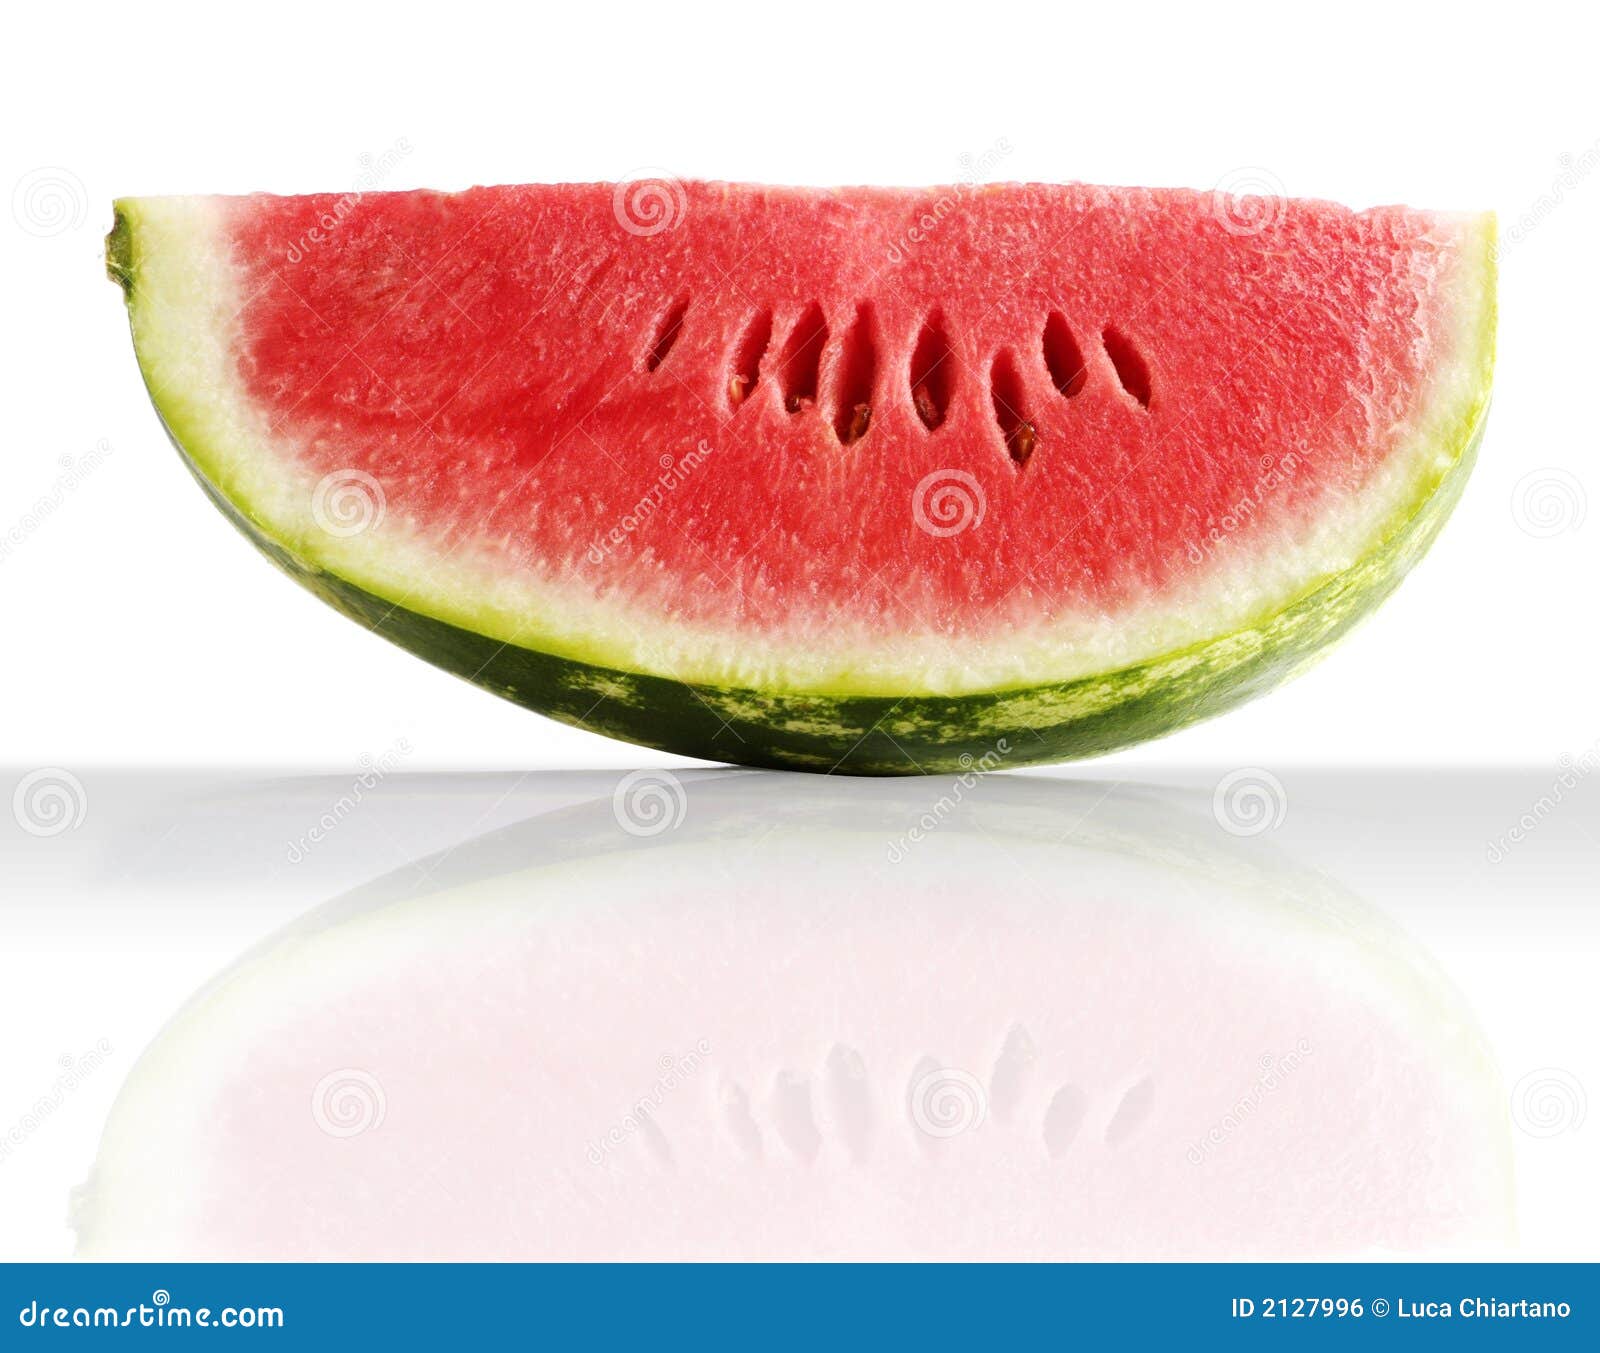 water-melon